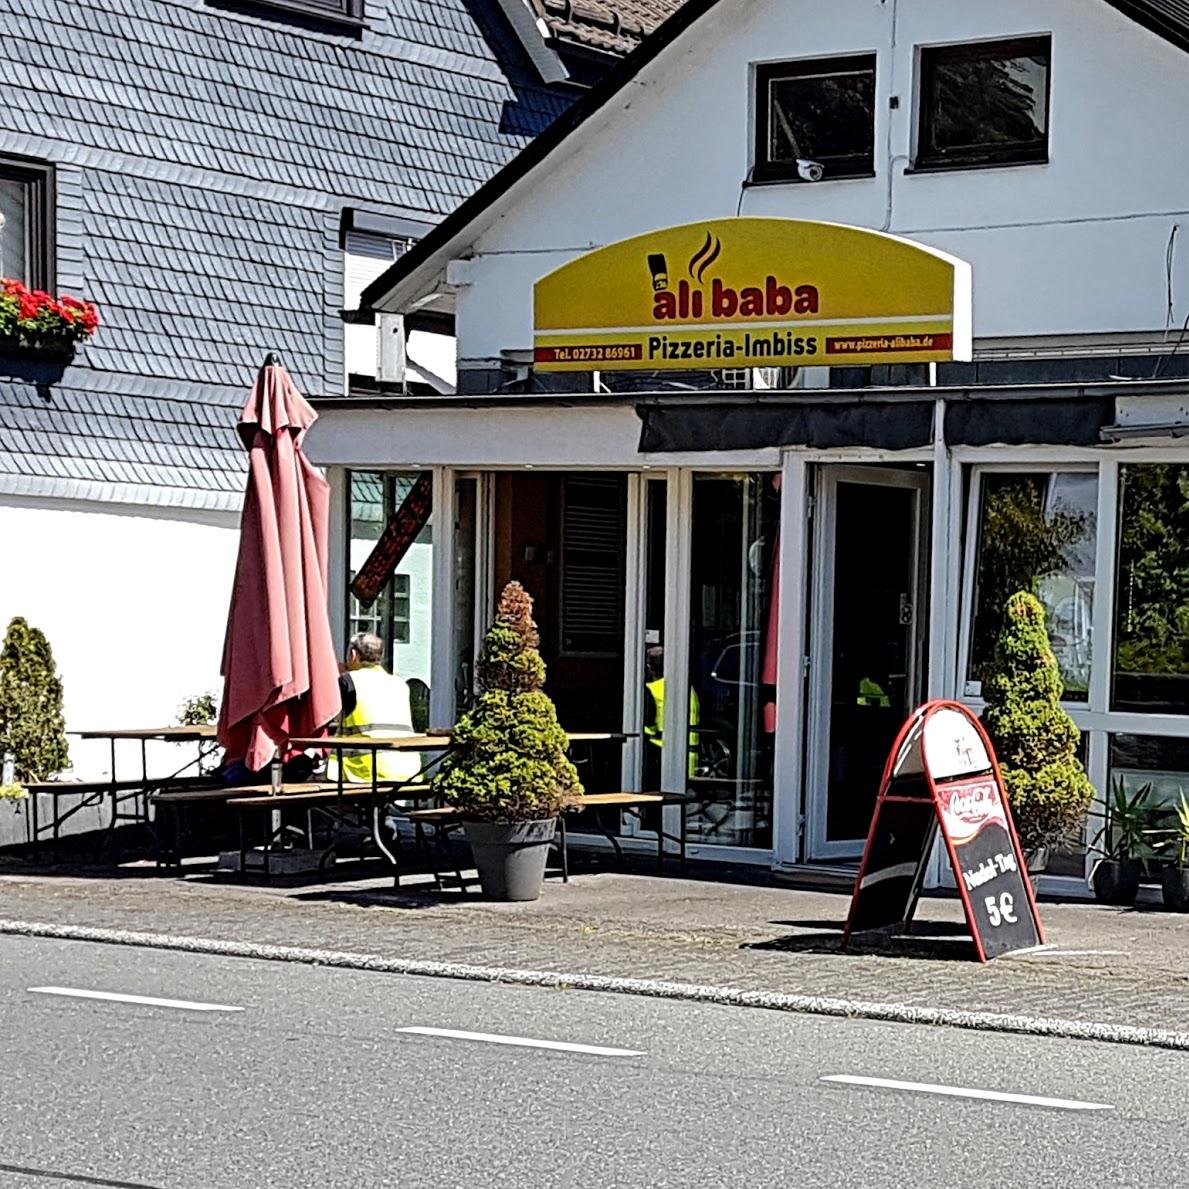 Restaurant "Alibaba Pizzeria in Krombach" in Kreuztal